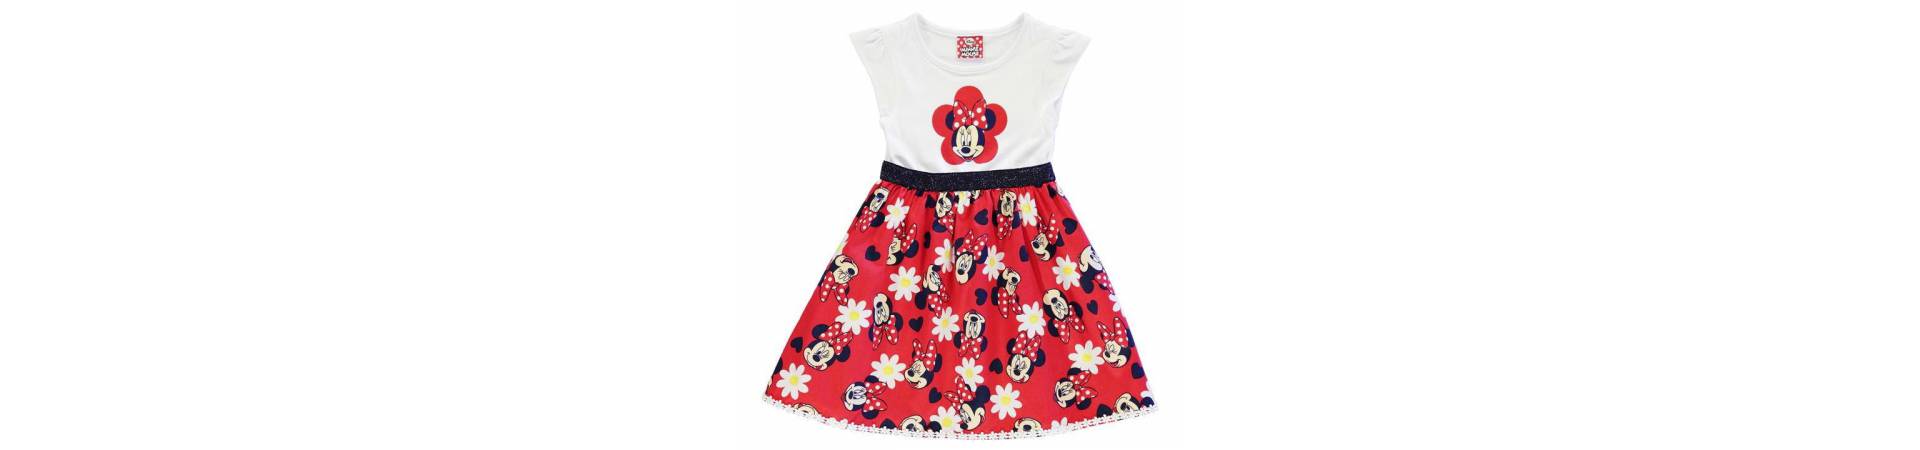 Disney Minnie Mouse dress